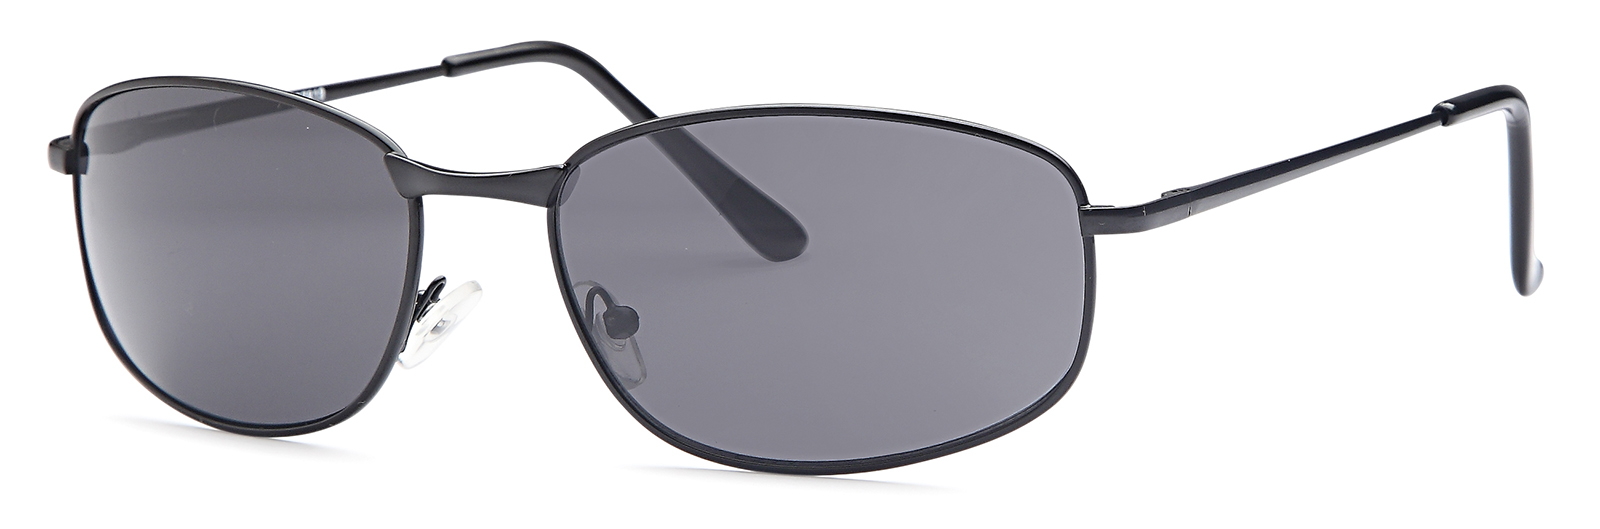 WC7819 - Wire Frame Sunglasses - Beach Time Sunglasses